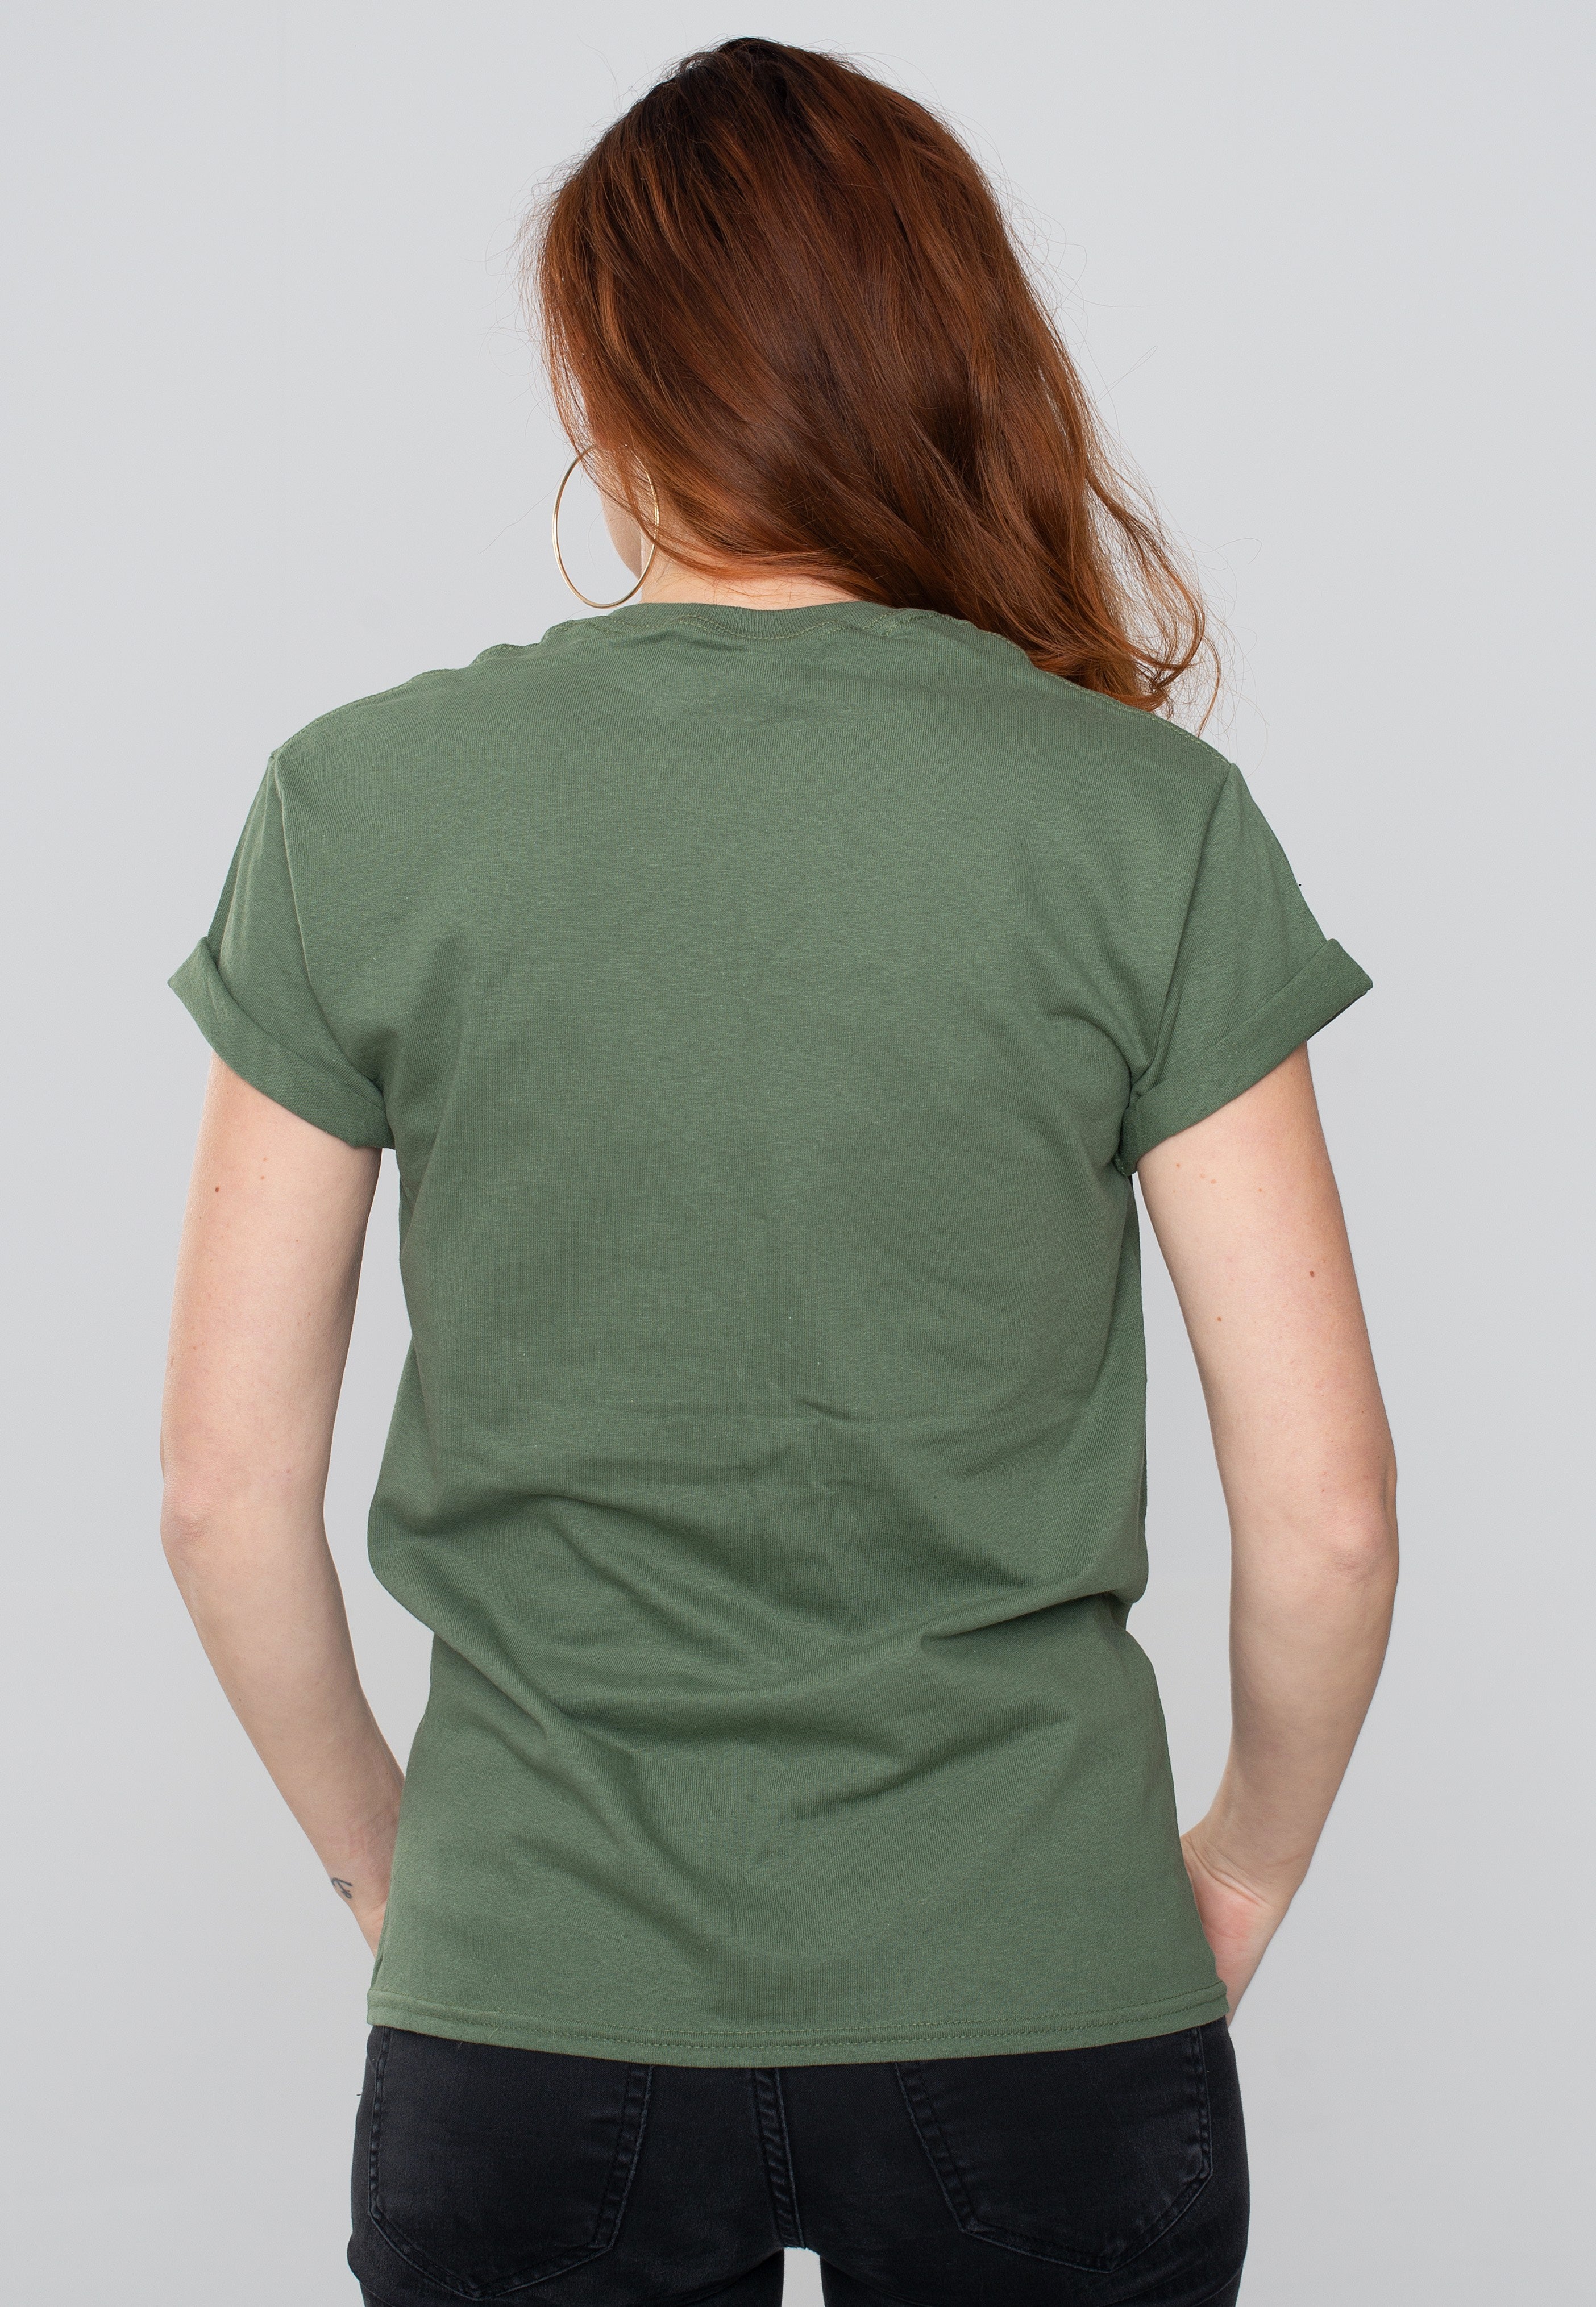 August Burns Red - Death Below Military Green - T-Shirt | Women-Image